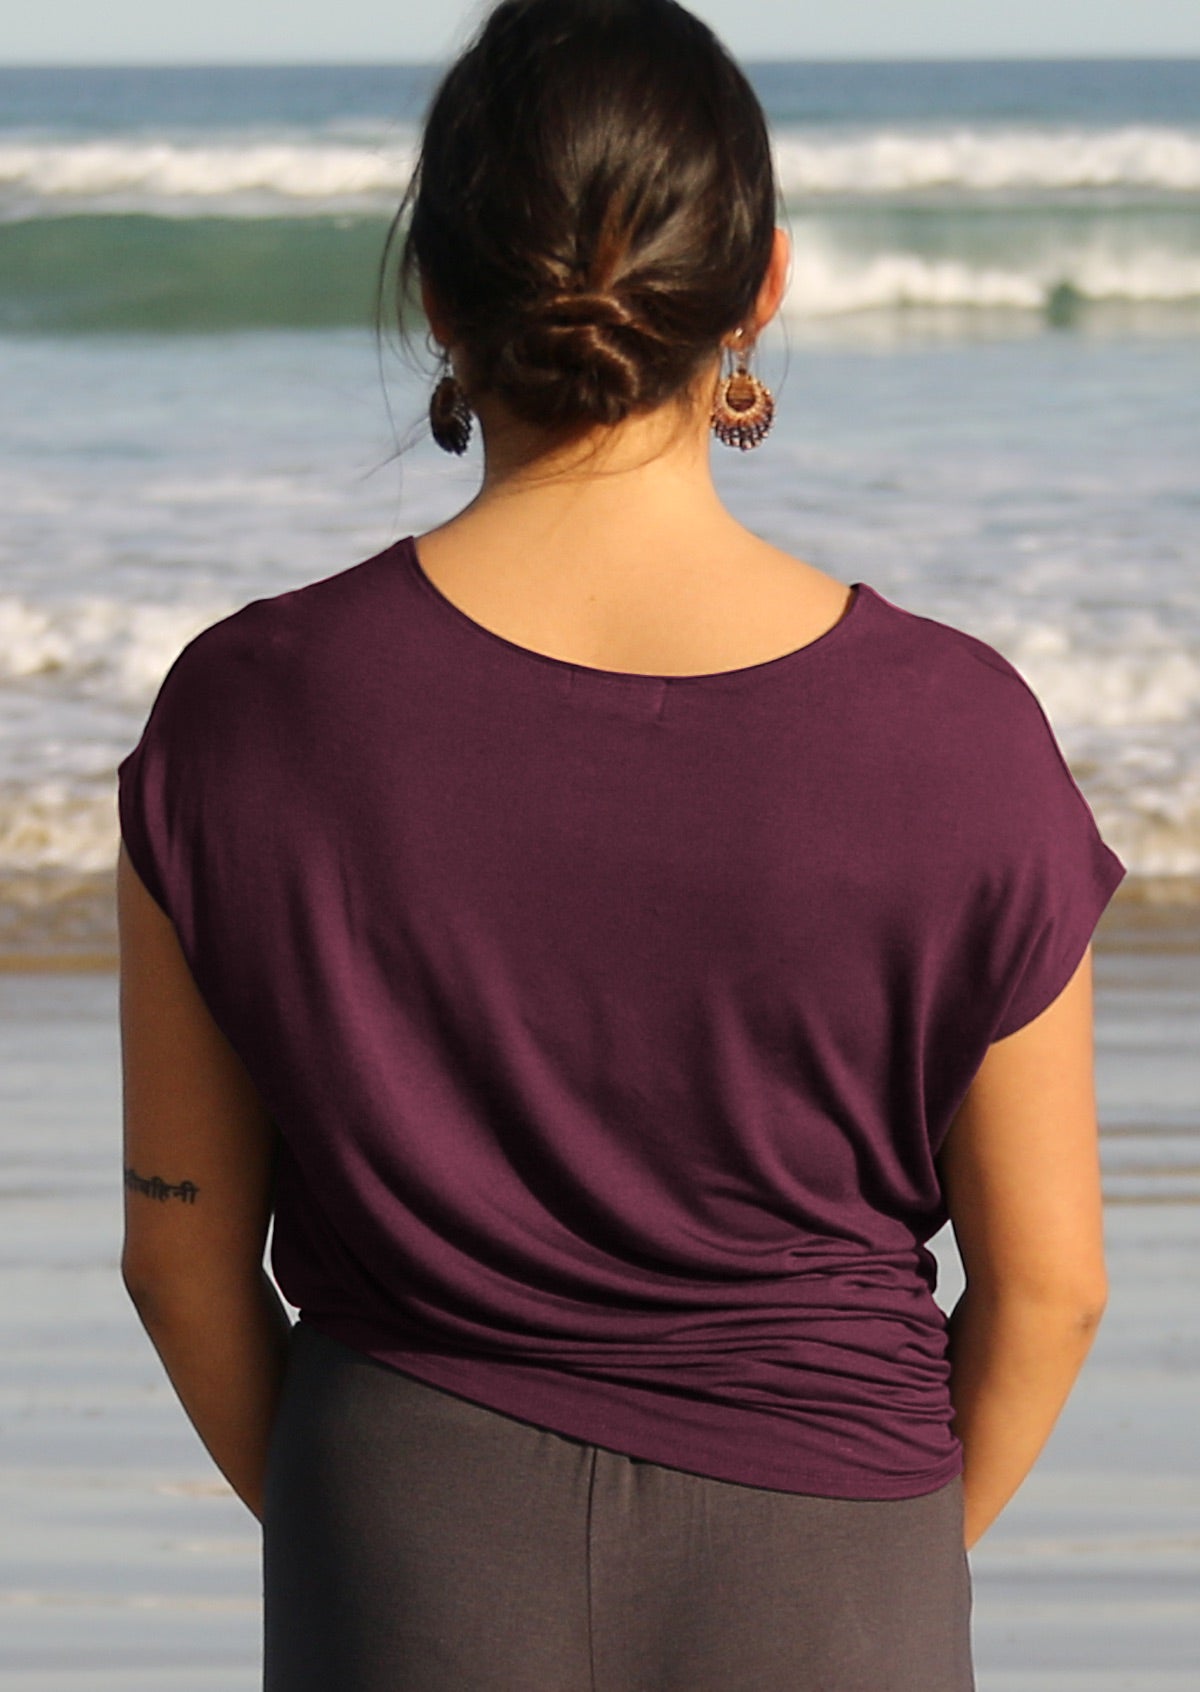 back view of woman wearing short sleeve purple t-shirt